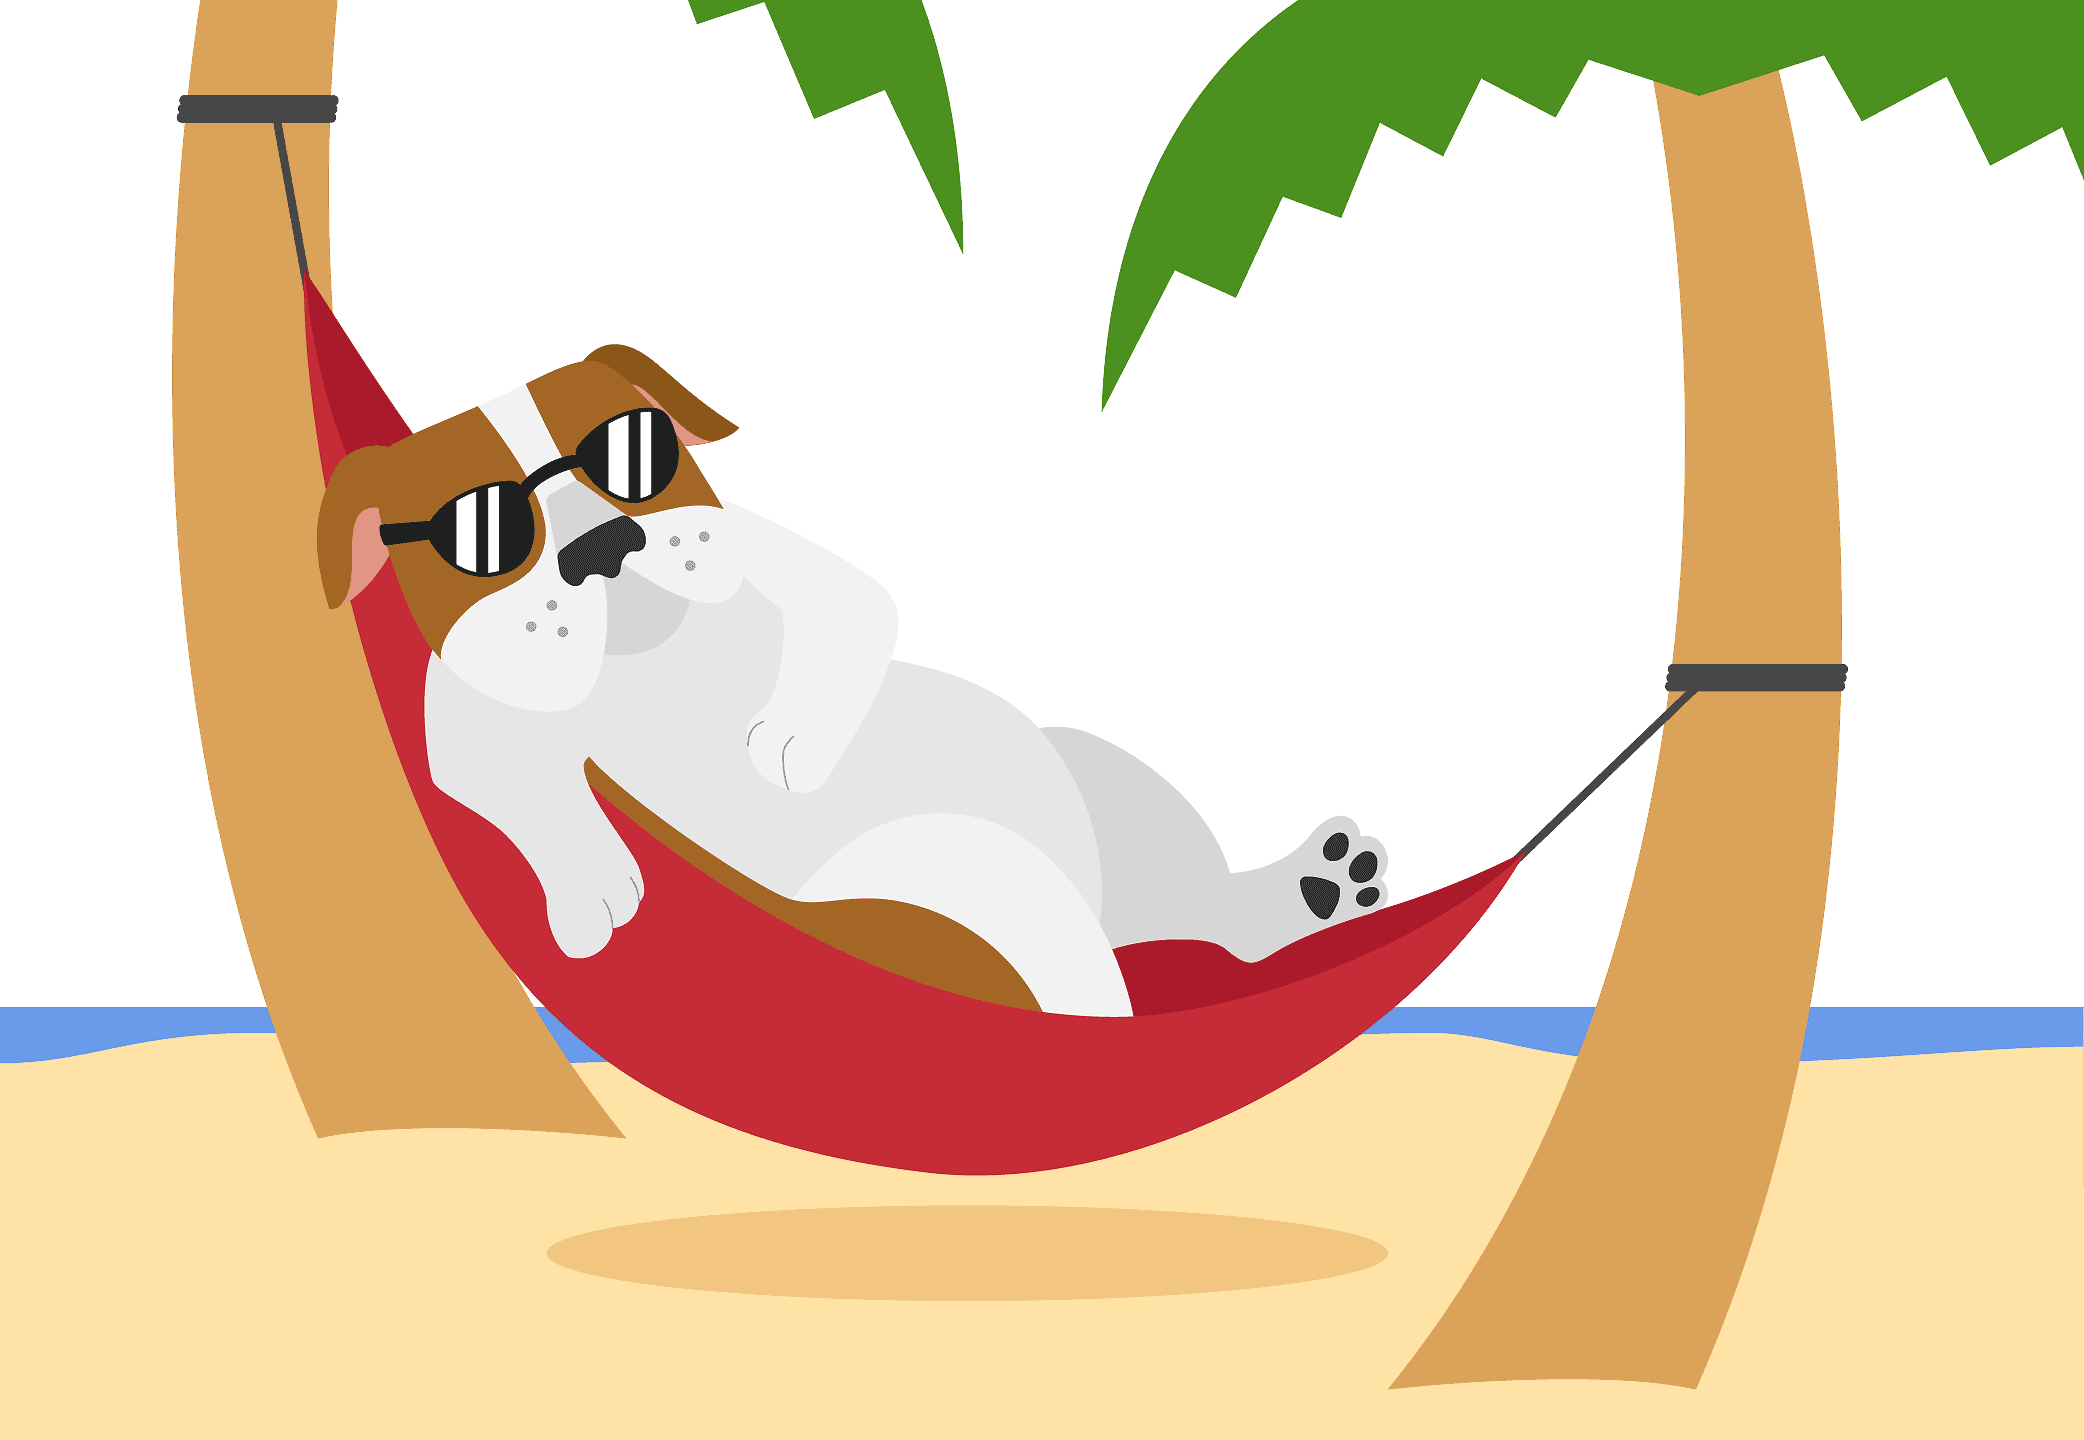 An illustrated bulldog laying in a hammock